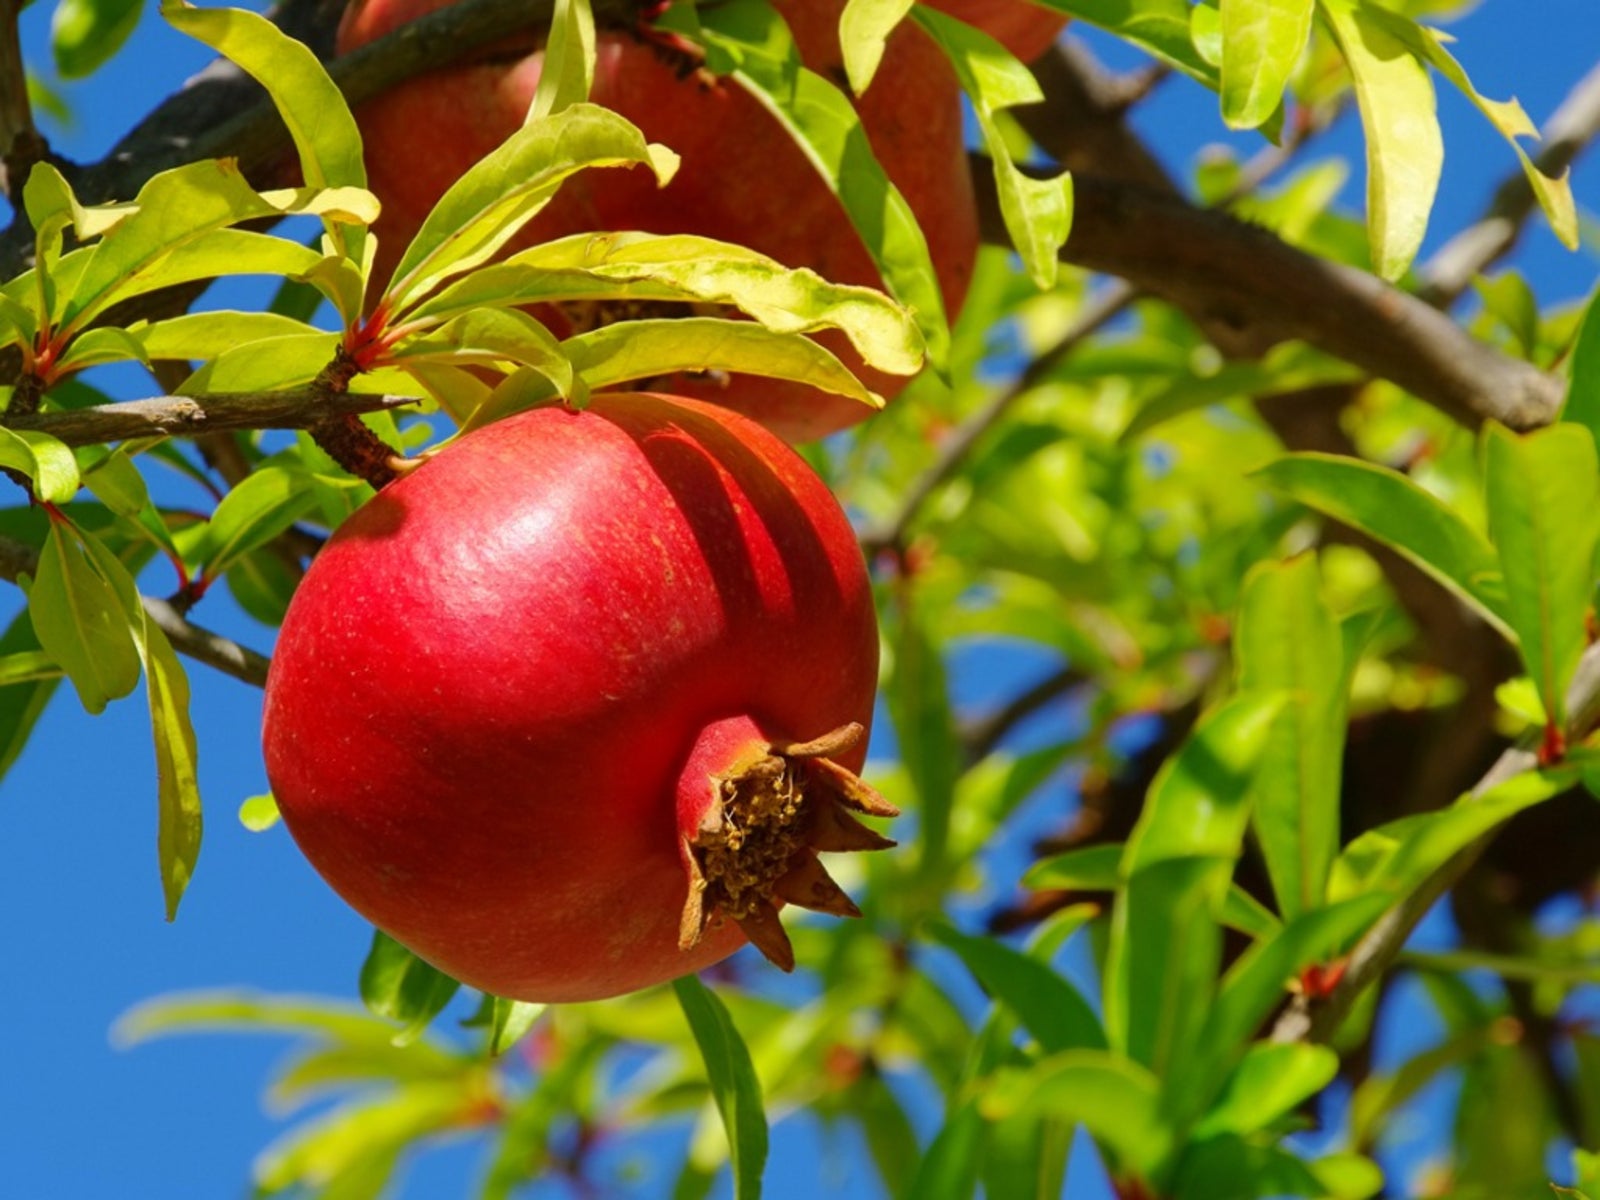 Why a fruit tree bares no fruit